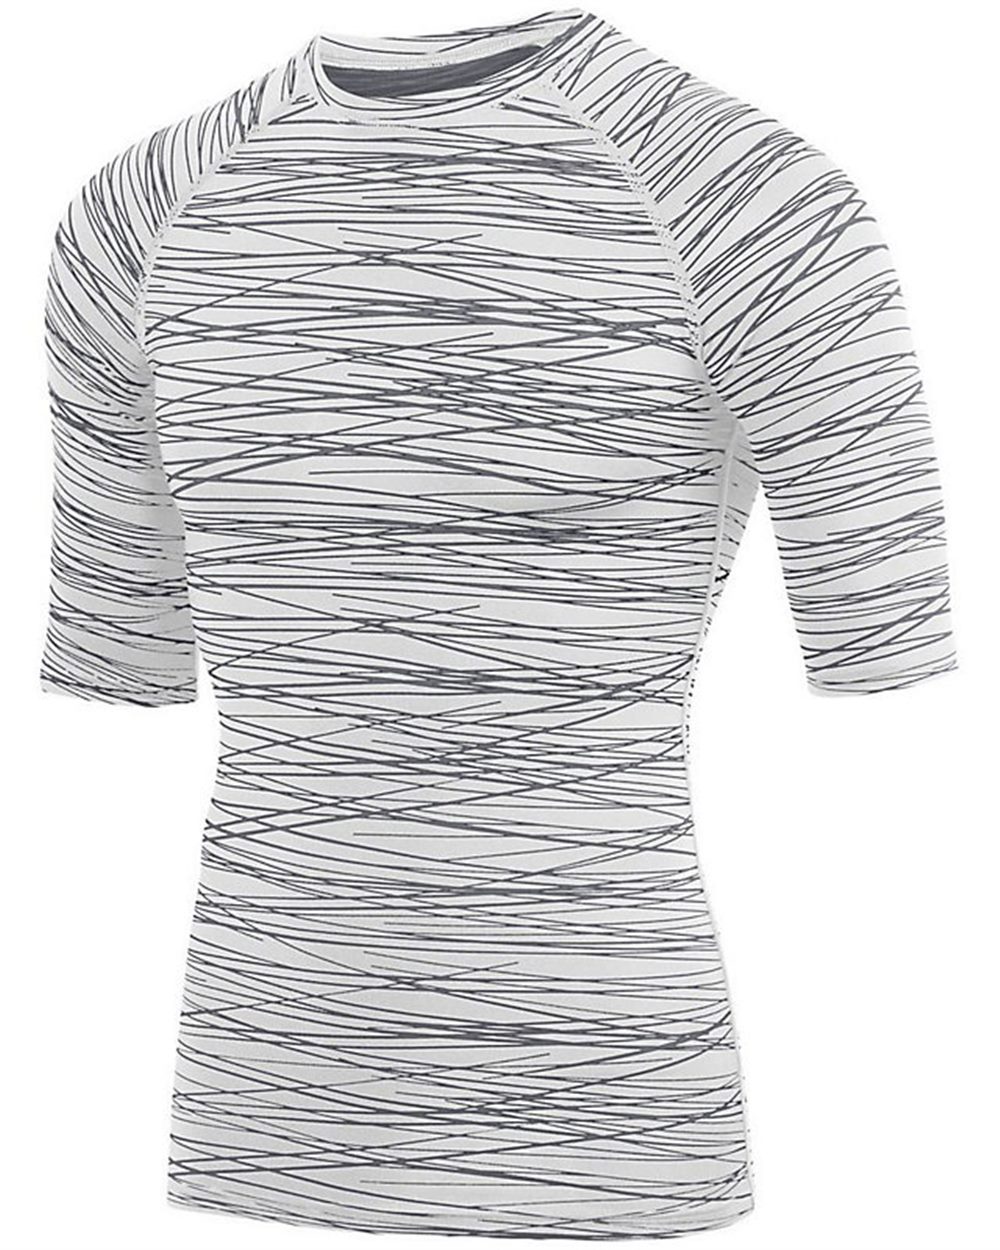 Augusta Sportswear 2607 - Youth Hyperform Compression Half Sleeve Shirt